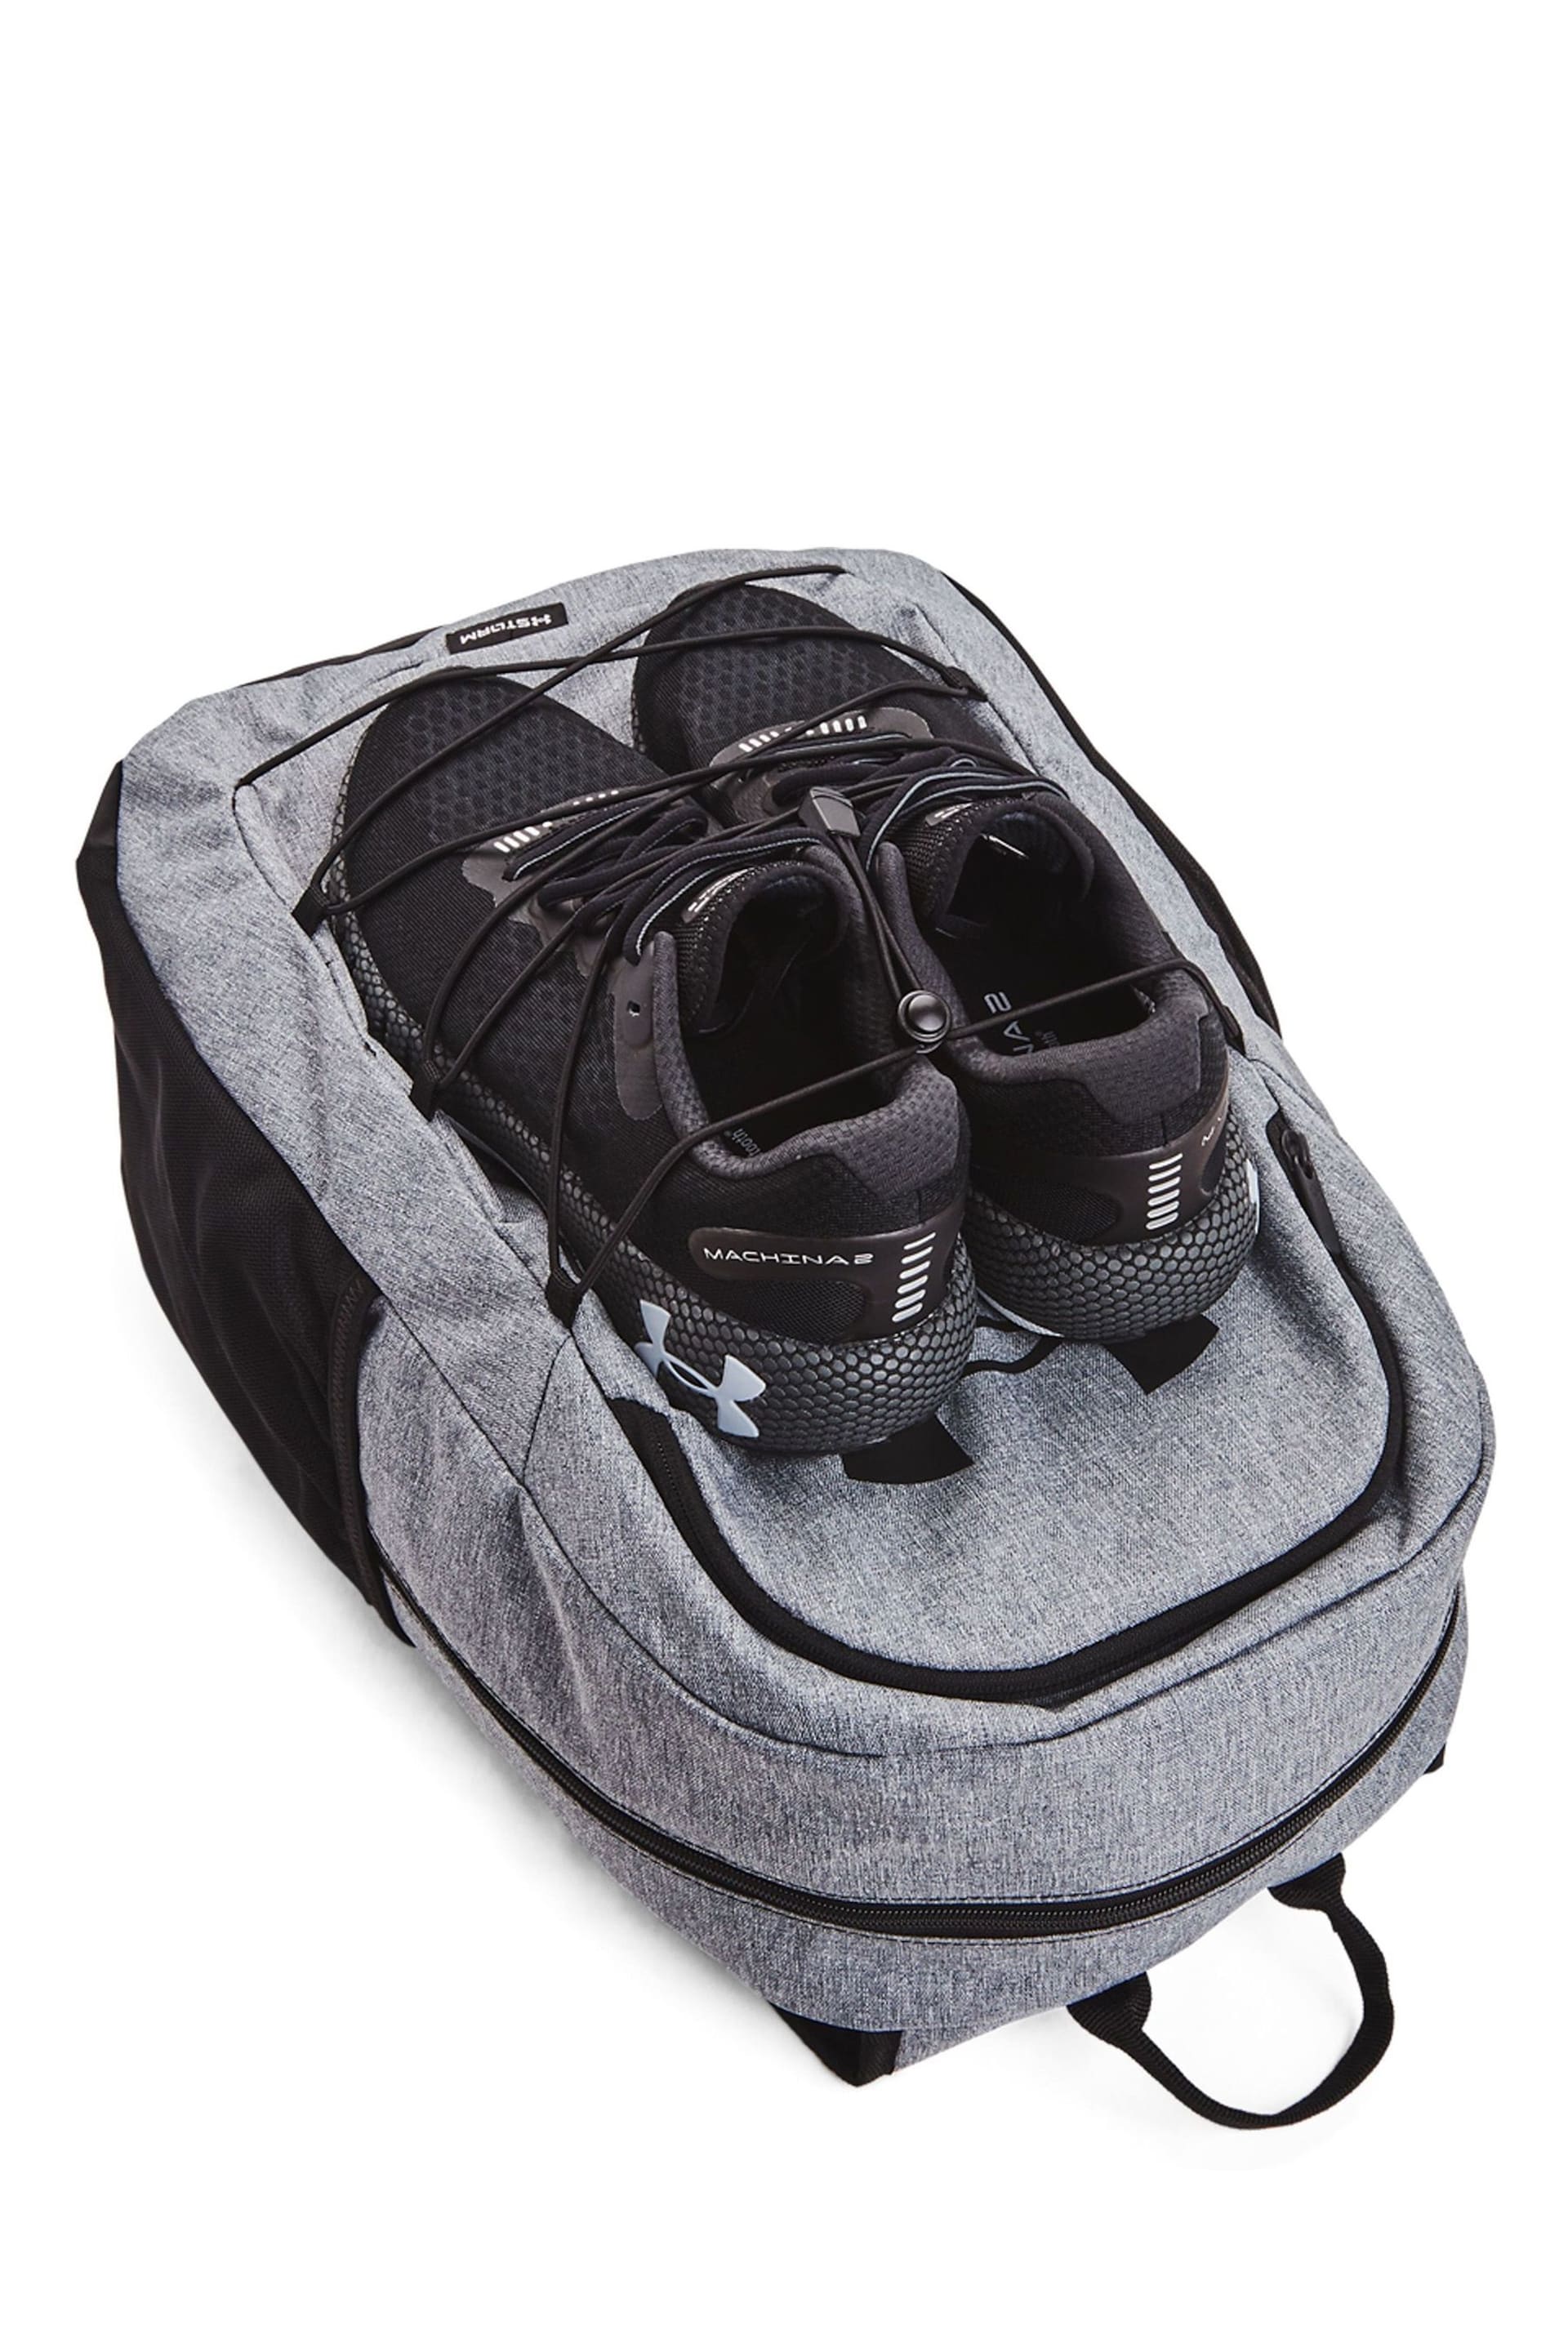 Under Armour Grey Hustle Sport Backpack - Image 6 of 7